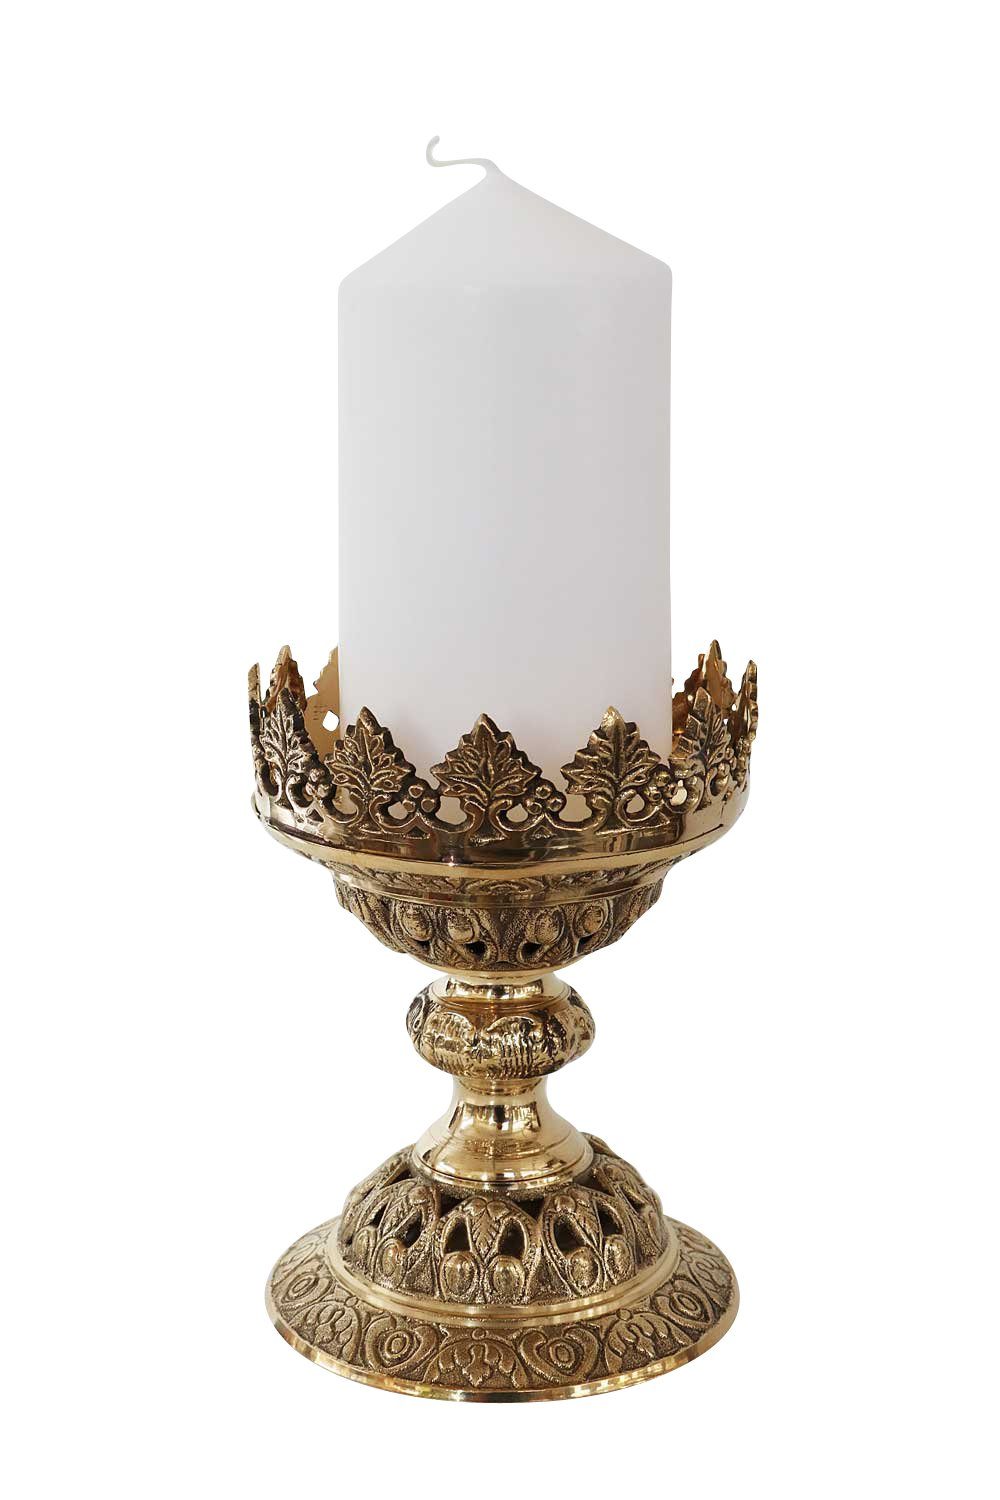 Aubaho Kerzenständer Kerzenleuchter Altarleuchter Antik-Stil 16cm Leuchter Kerzenständer go